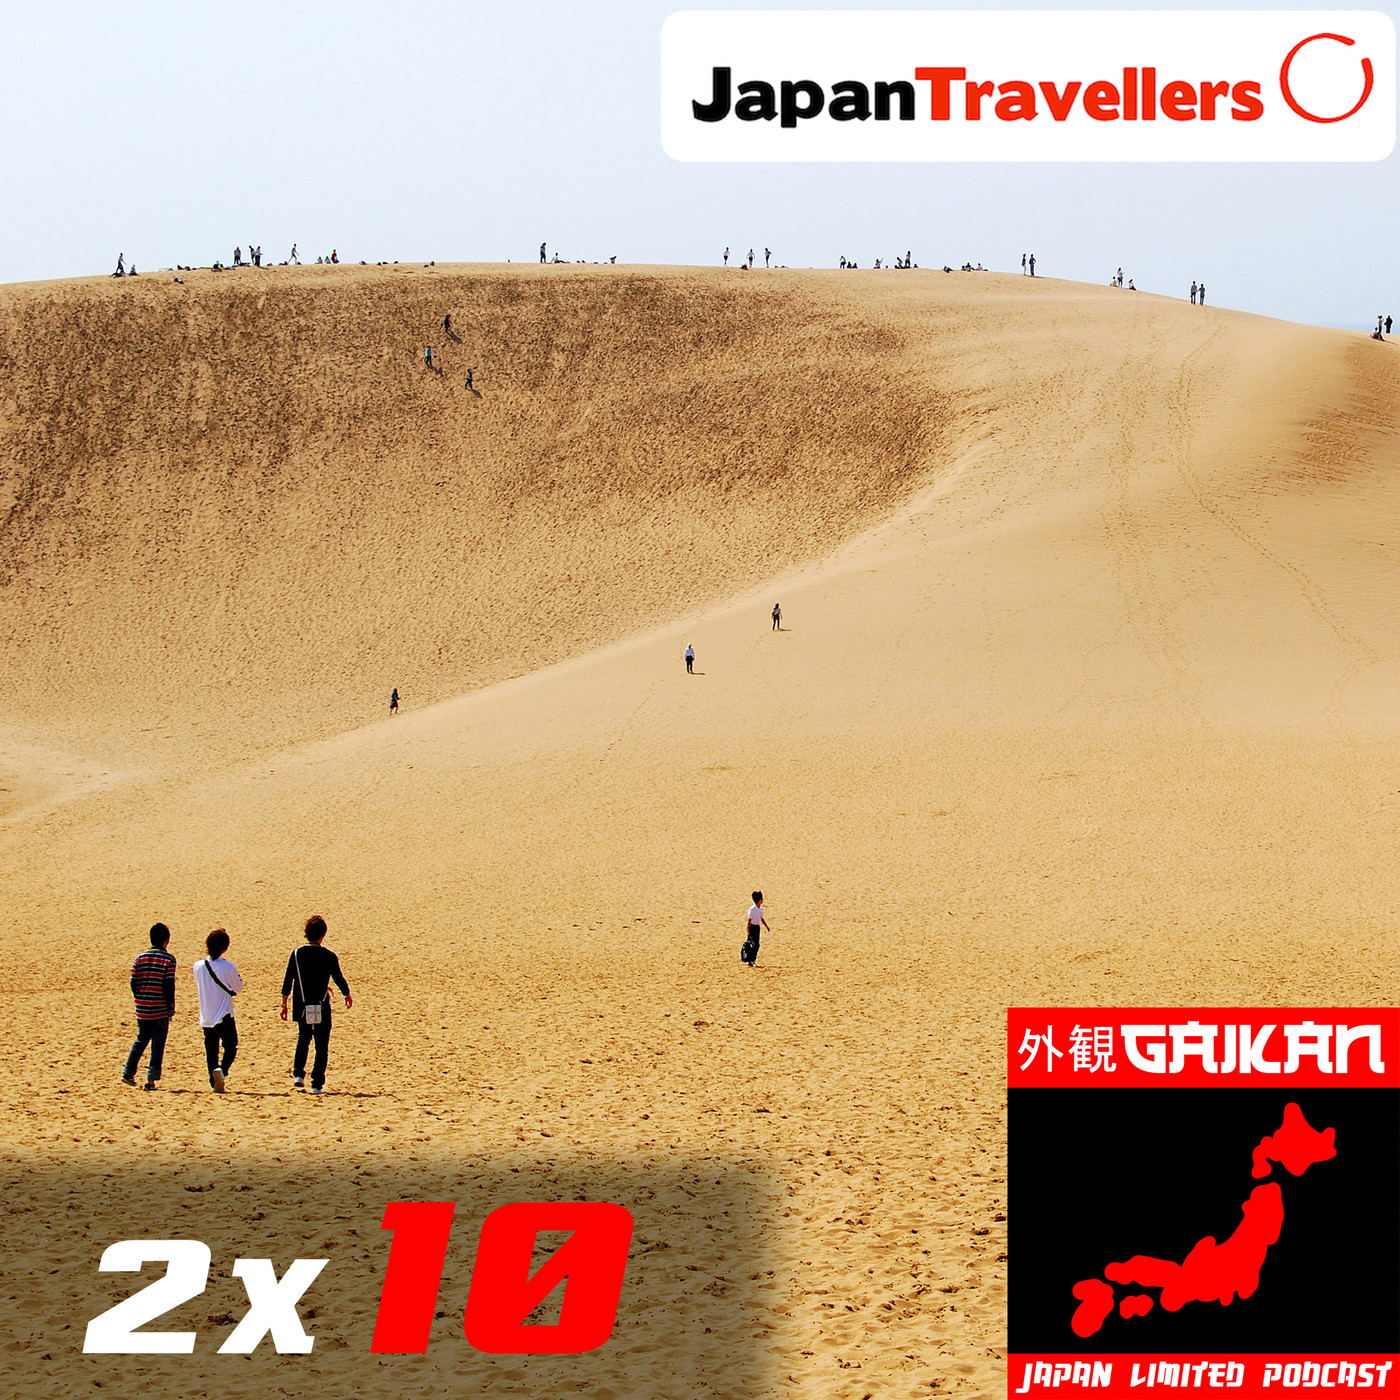 Podcast de Japón - GAIKAN Japan Limited Podcast ✈️ Foro Ofertas Comerciales de Viajes